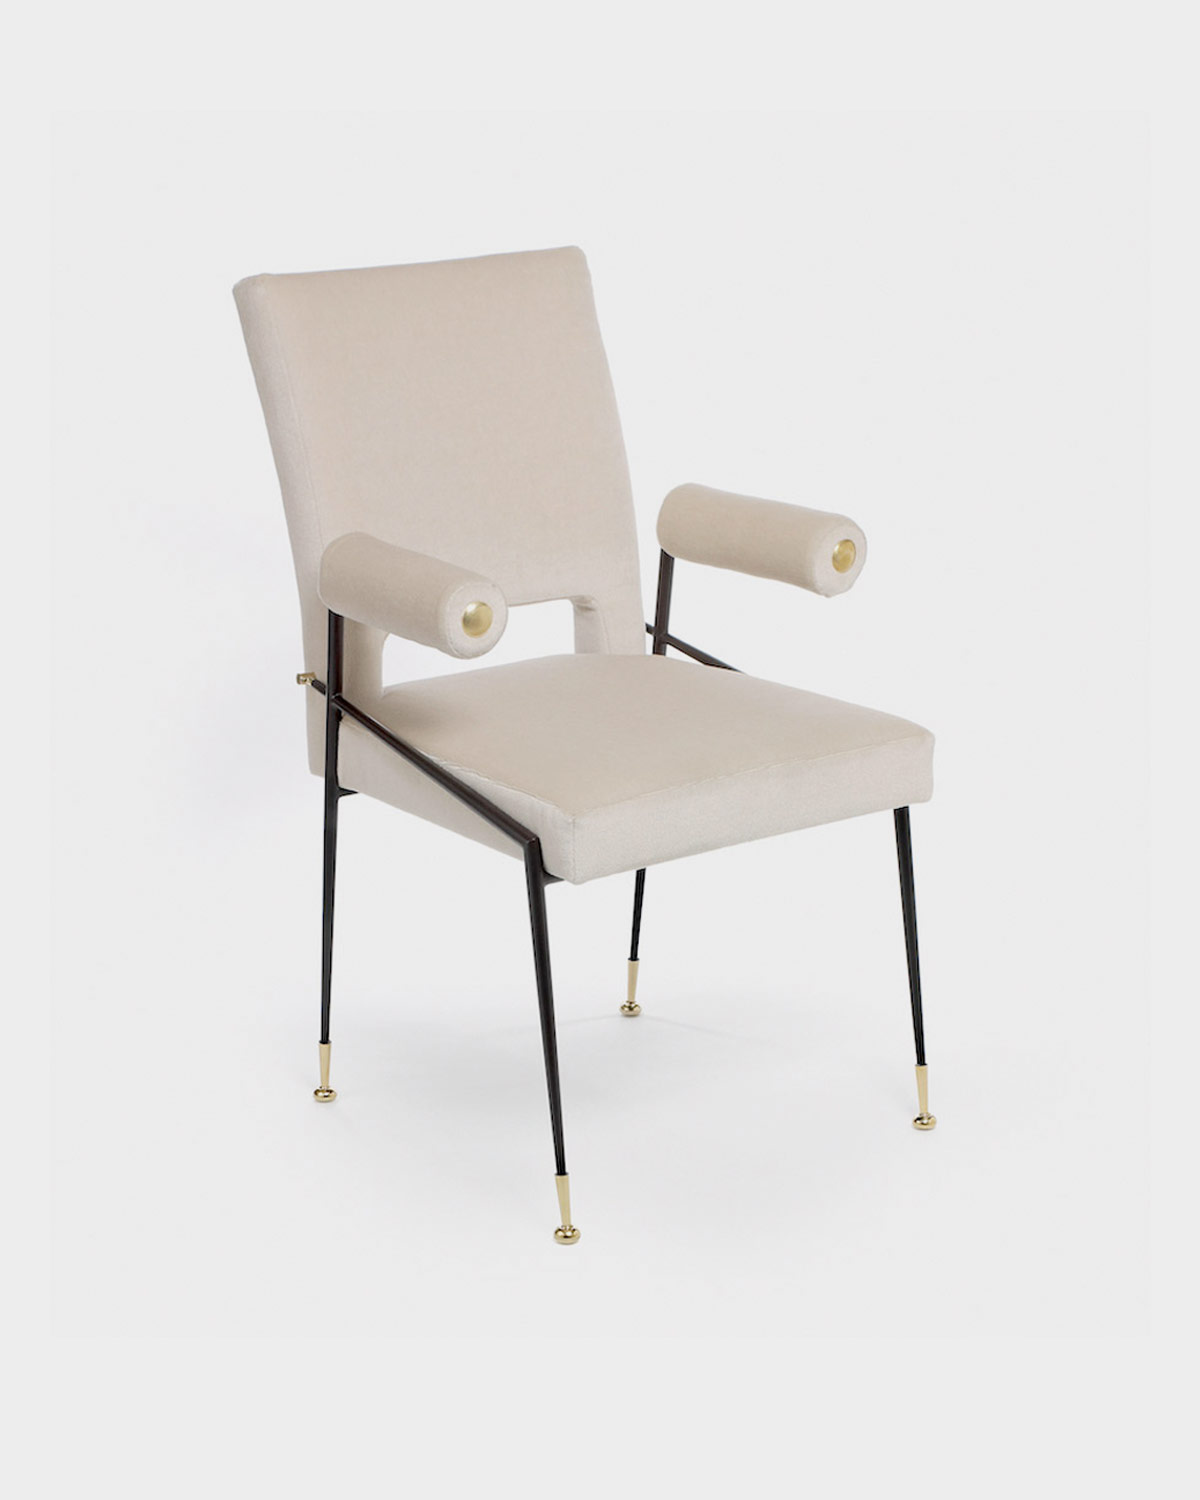 The Lewis Arm Dining Chair by Studio Van den Akker